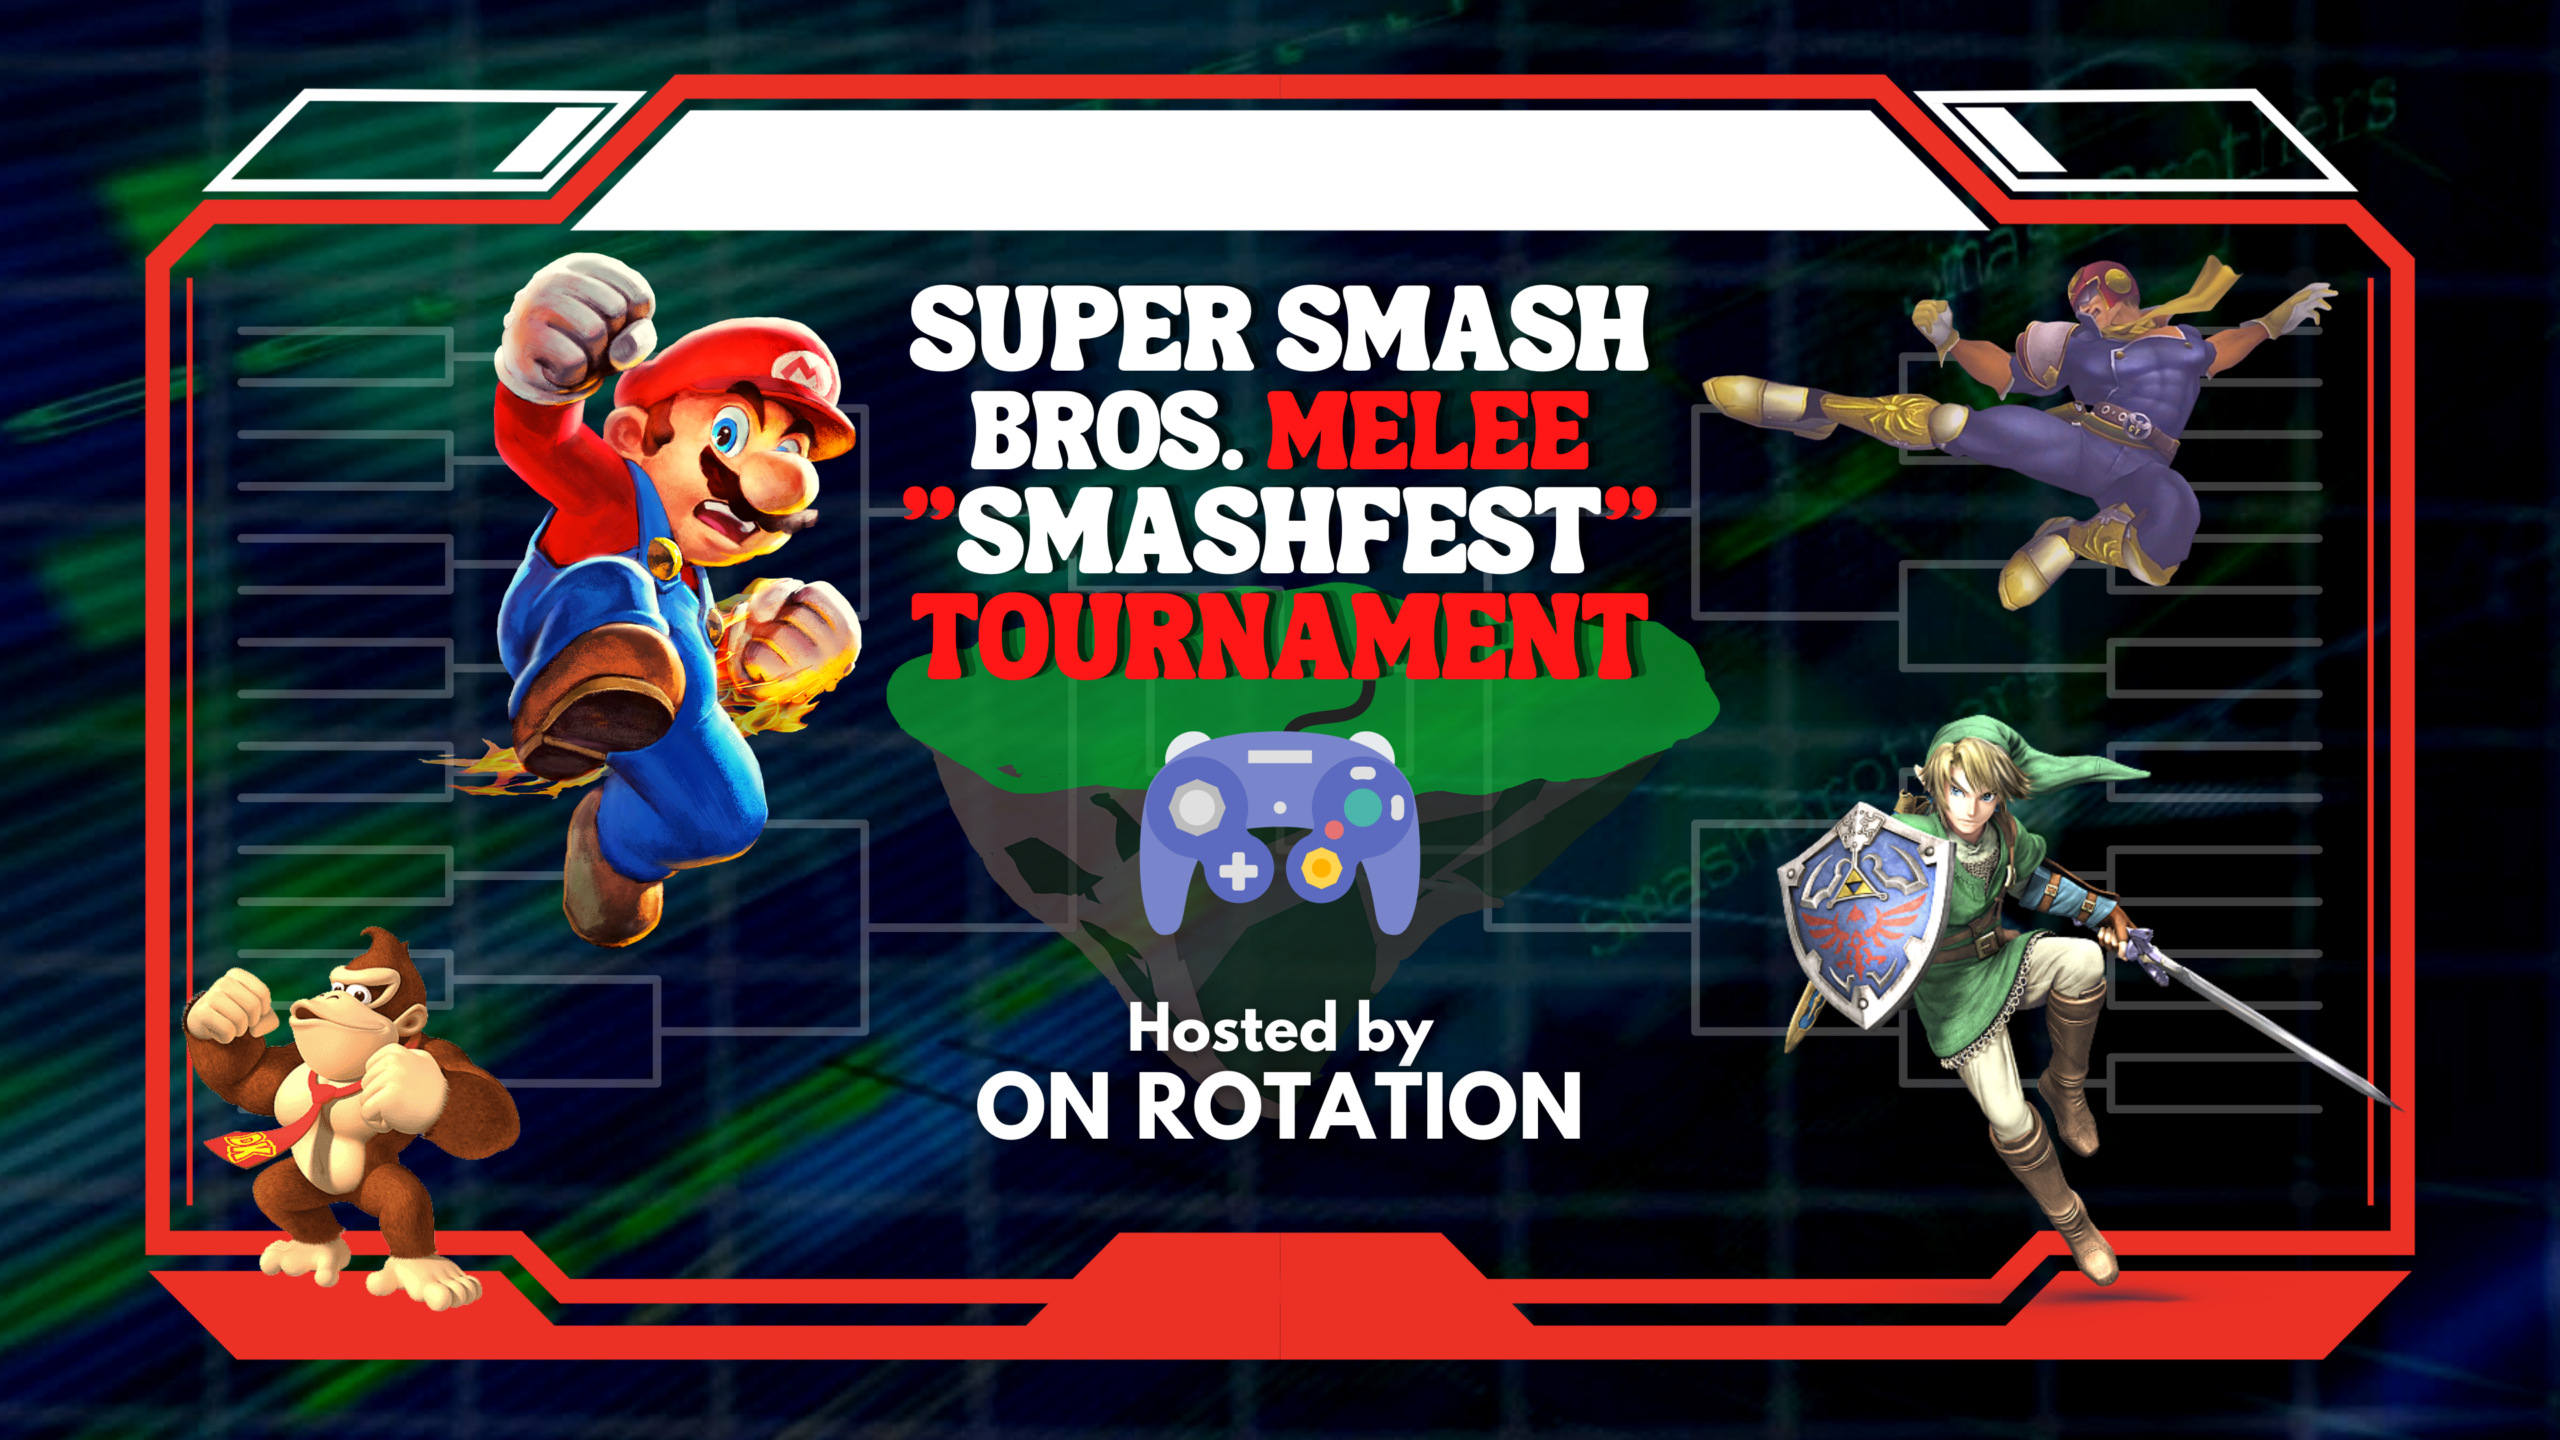 Super Smash Bros. Melee Smashfest Tournament at On Rotation